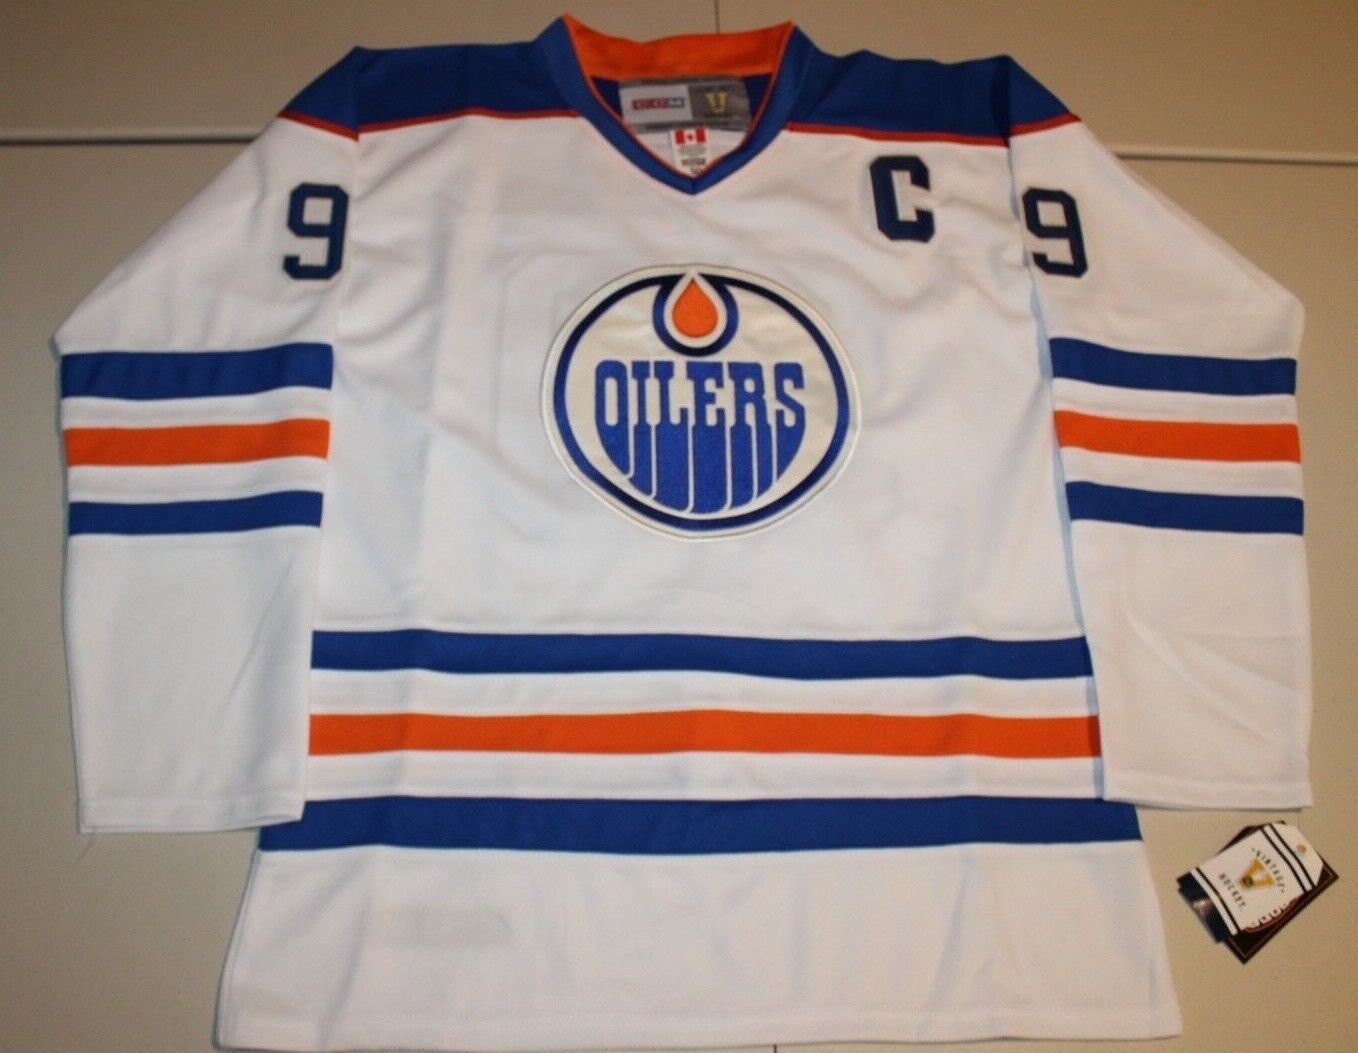 Lostboysvintage Vintage 1990s Edmonton Oilers NHL #01 Blank Hockey Jersey / Sportswear / Embroidered / Athleisure / Vintage Oilers / Streetwear